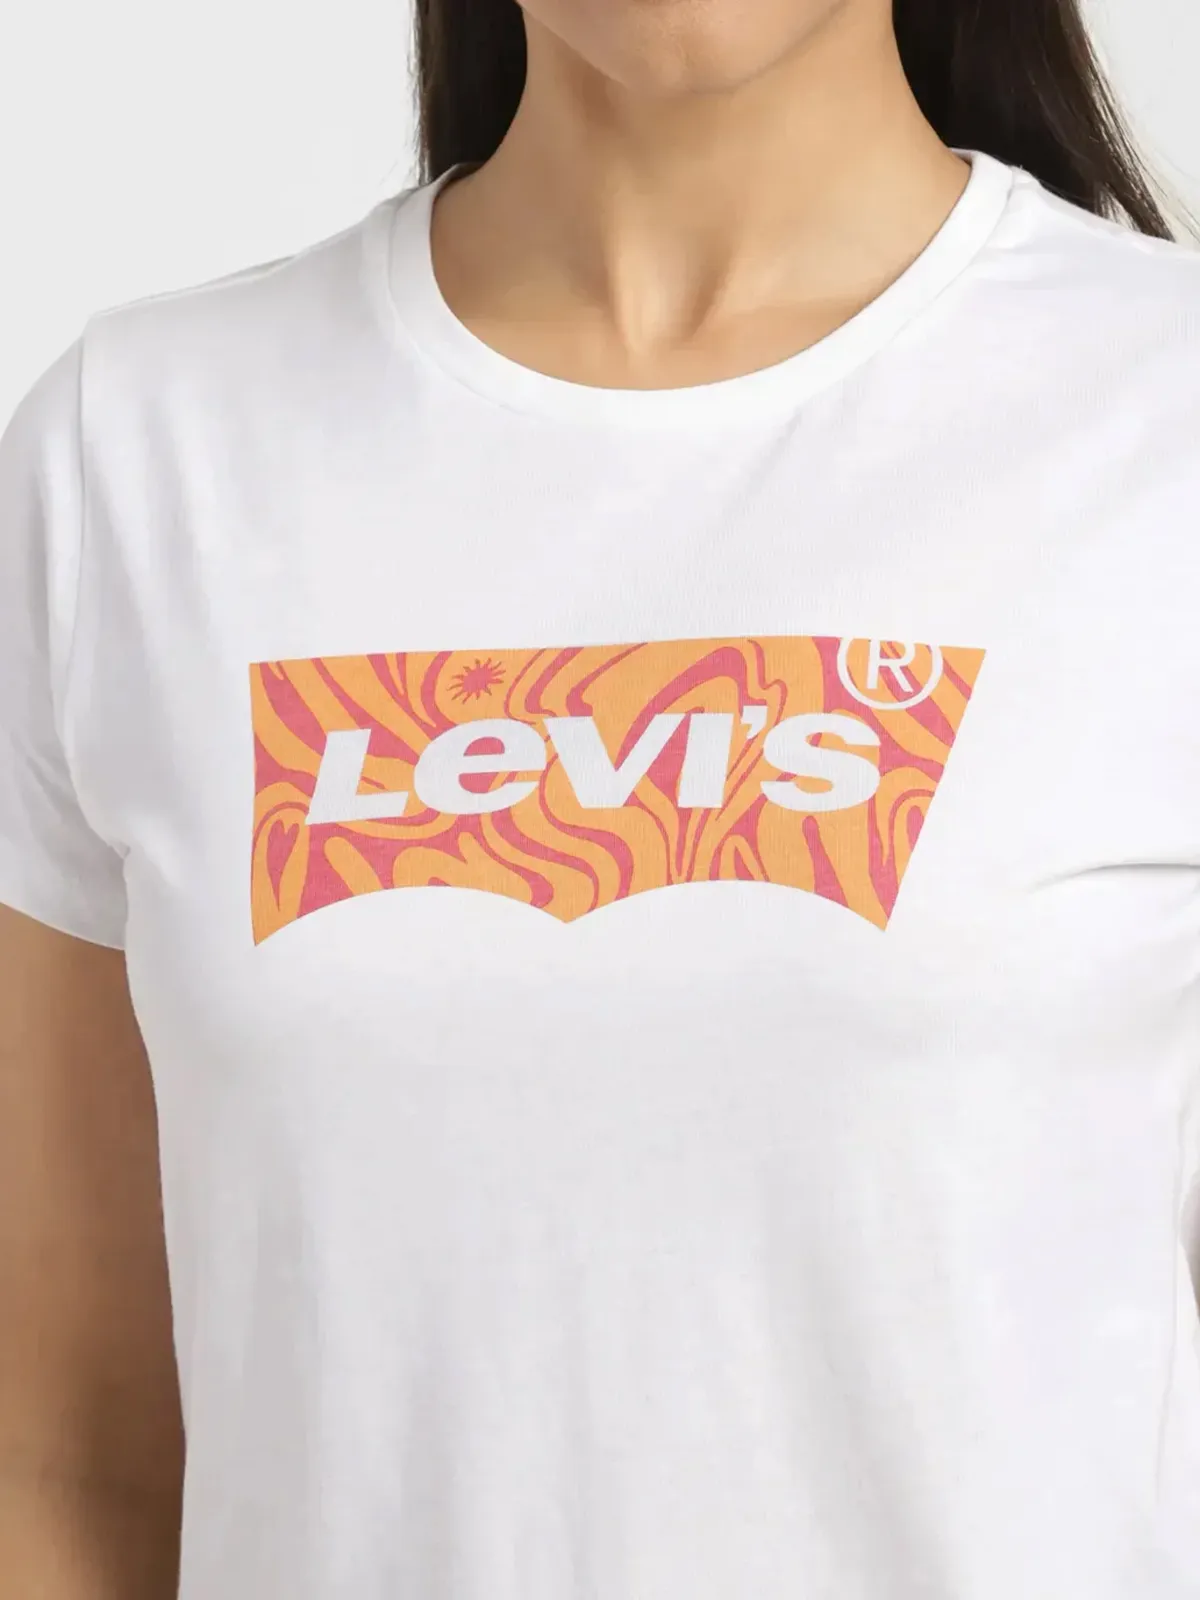 Levis white cotton half sleeves t shirt